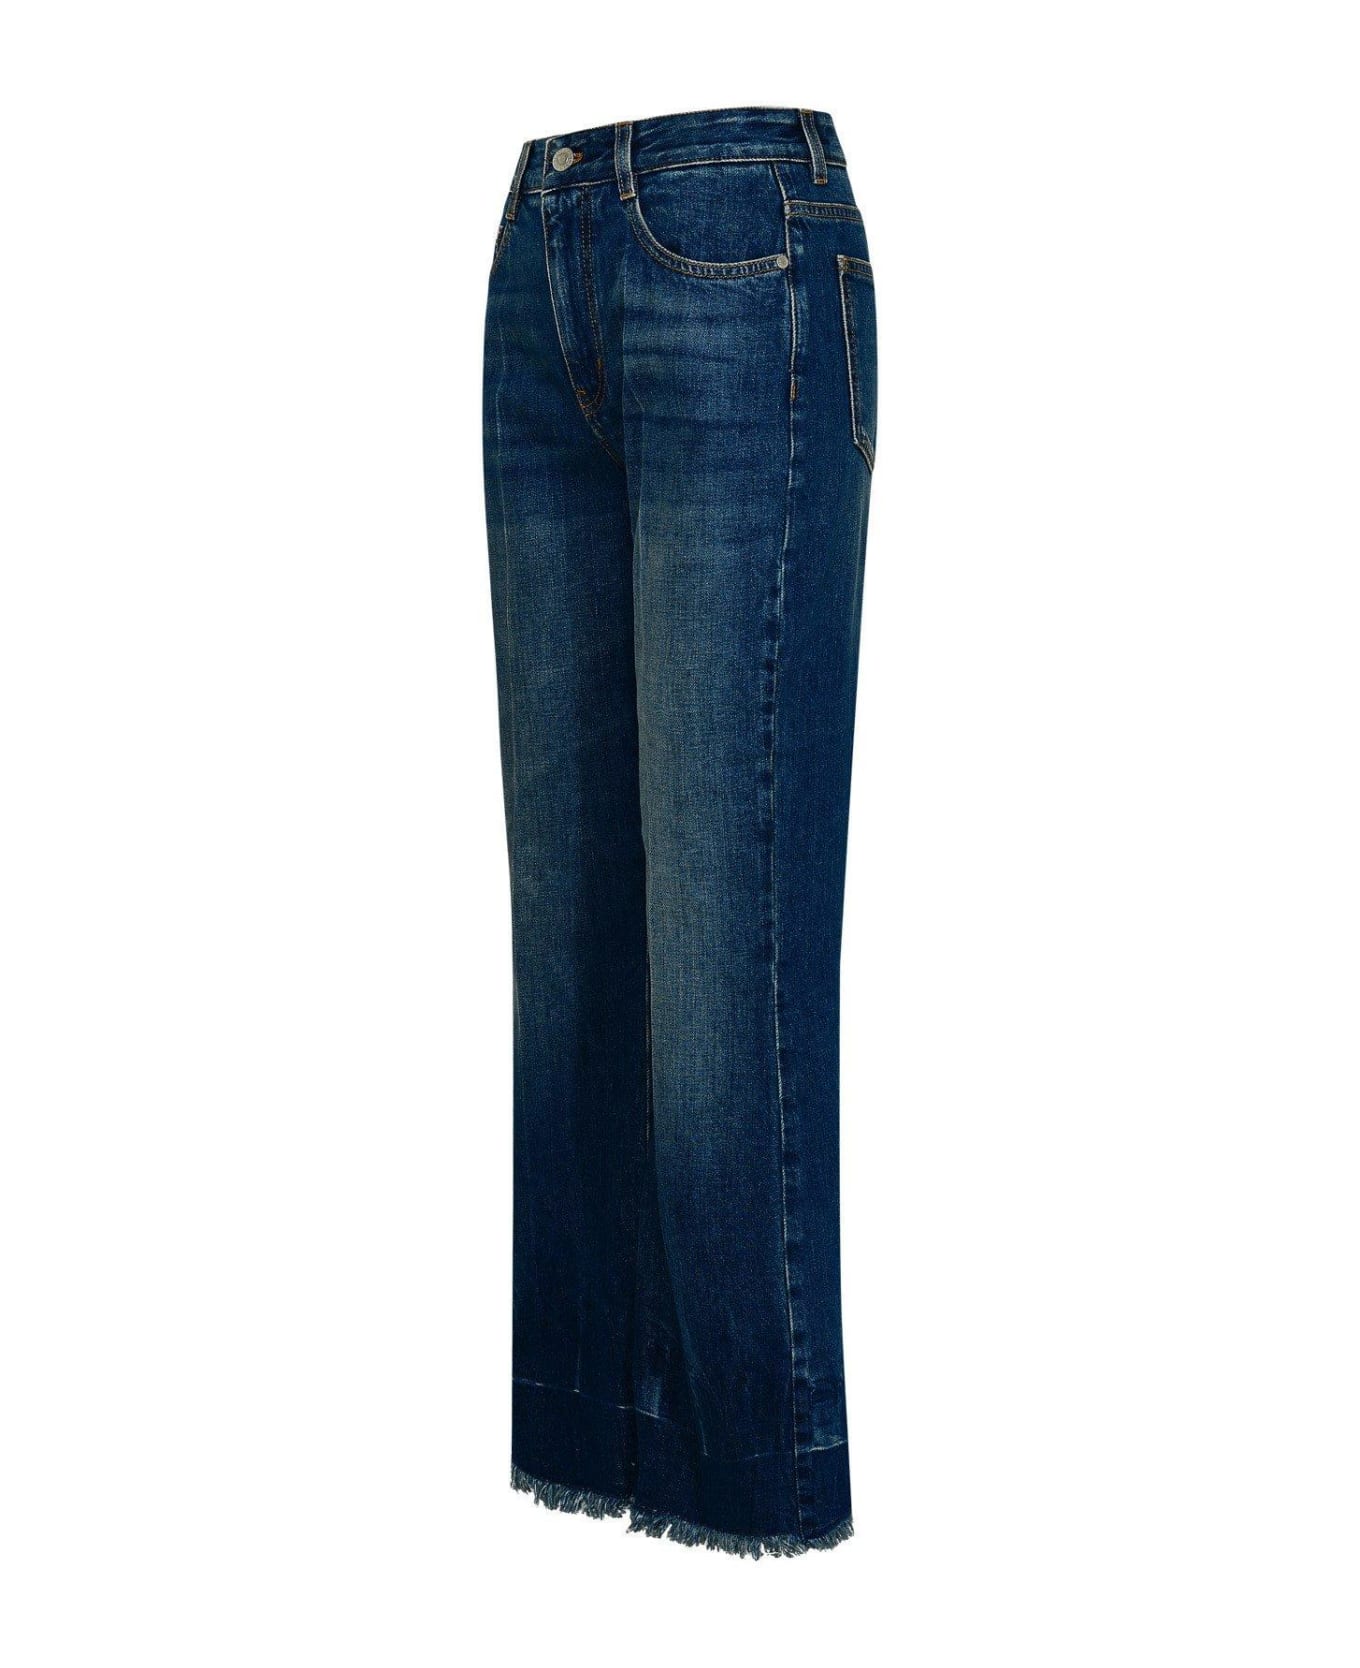 Stella McCartney Cropped Flared Jeans - Blu scuro デニム